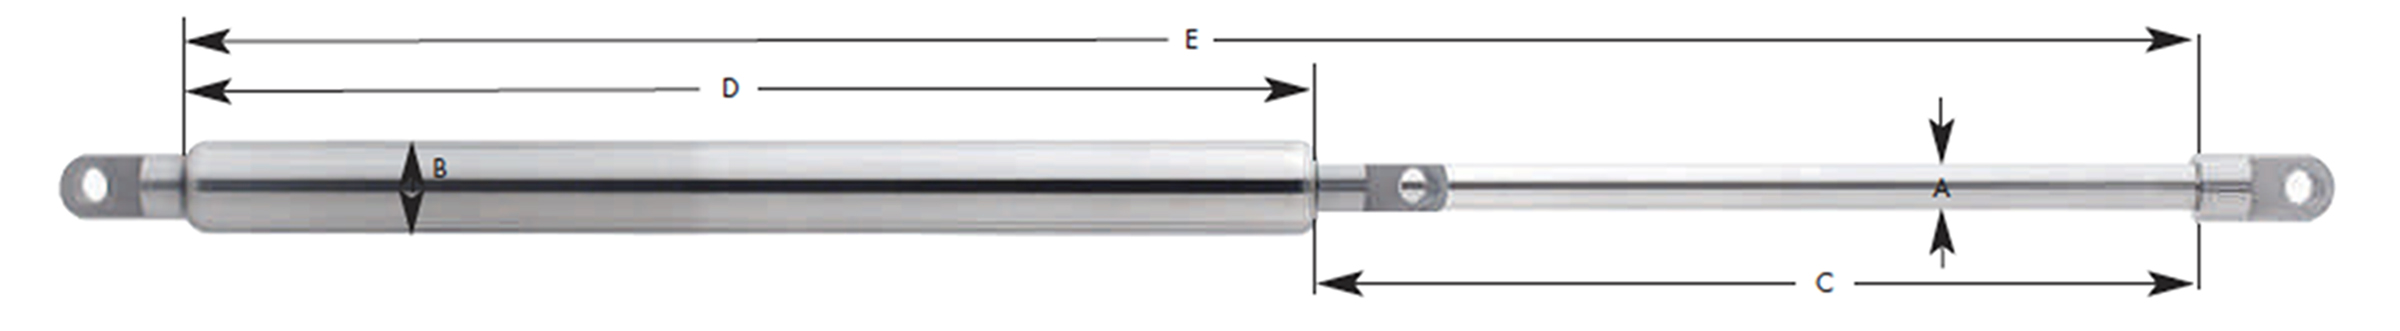 Adjustable Force Tension Gas Spring 1100-16